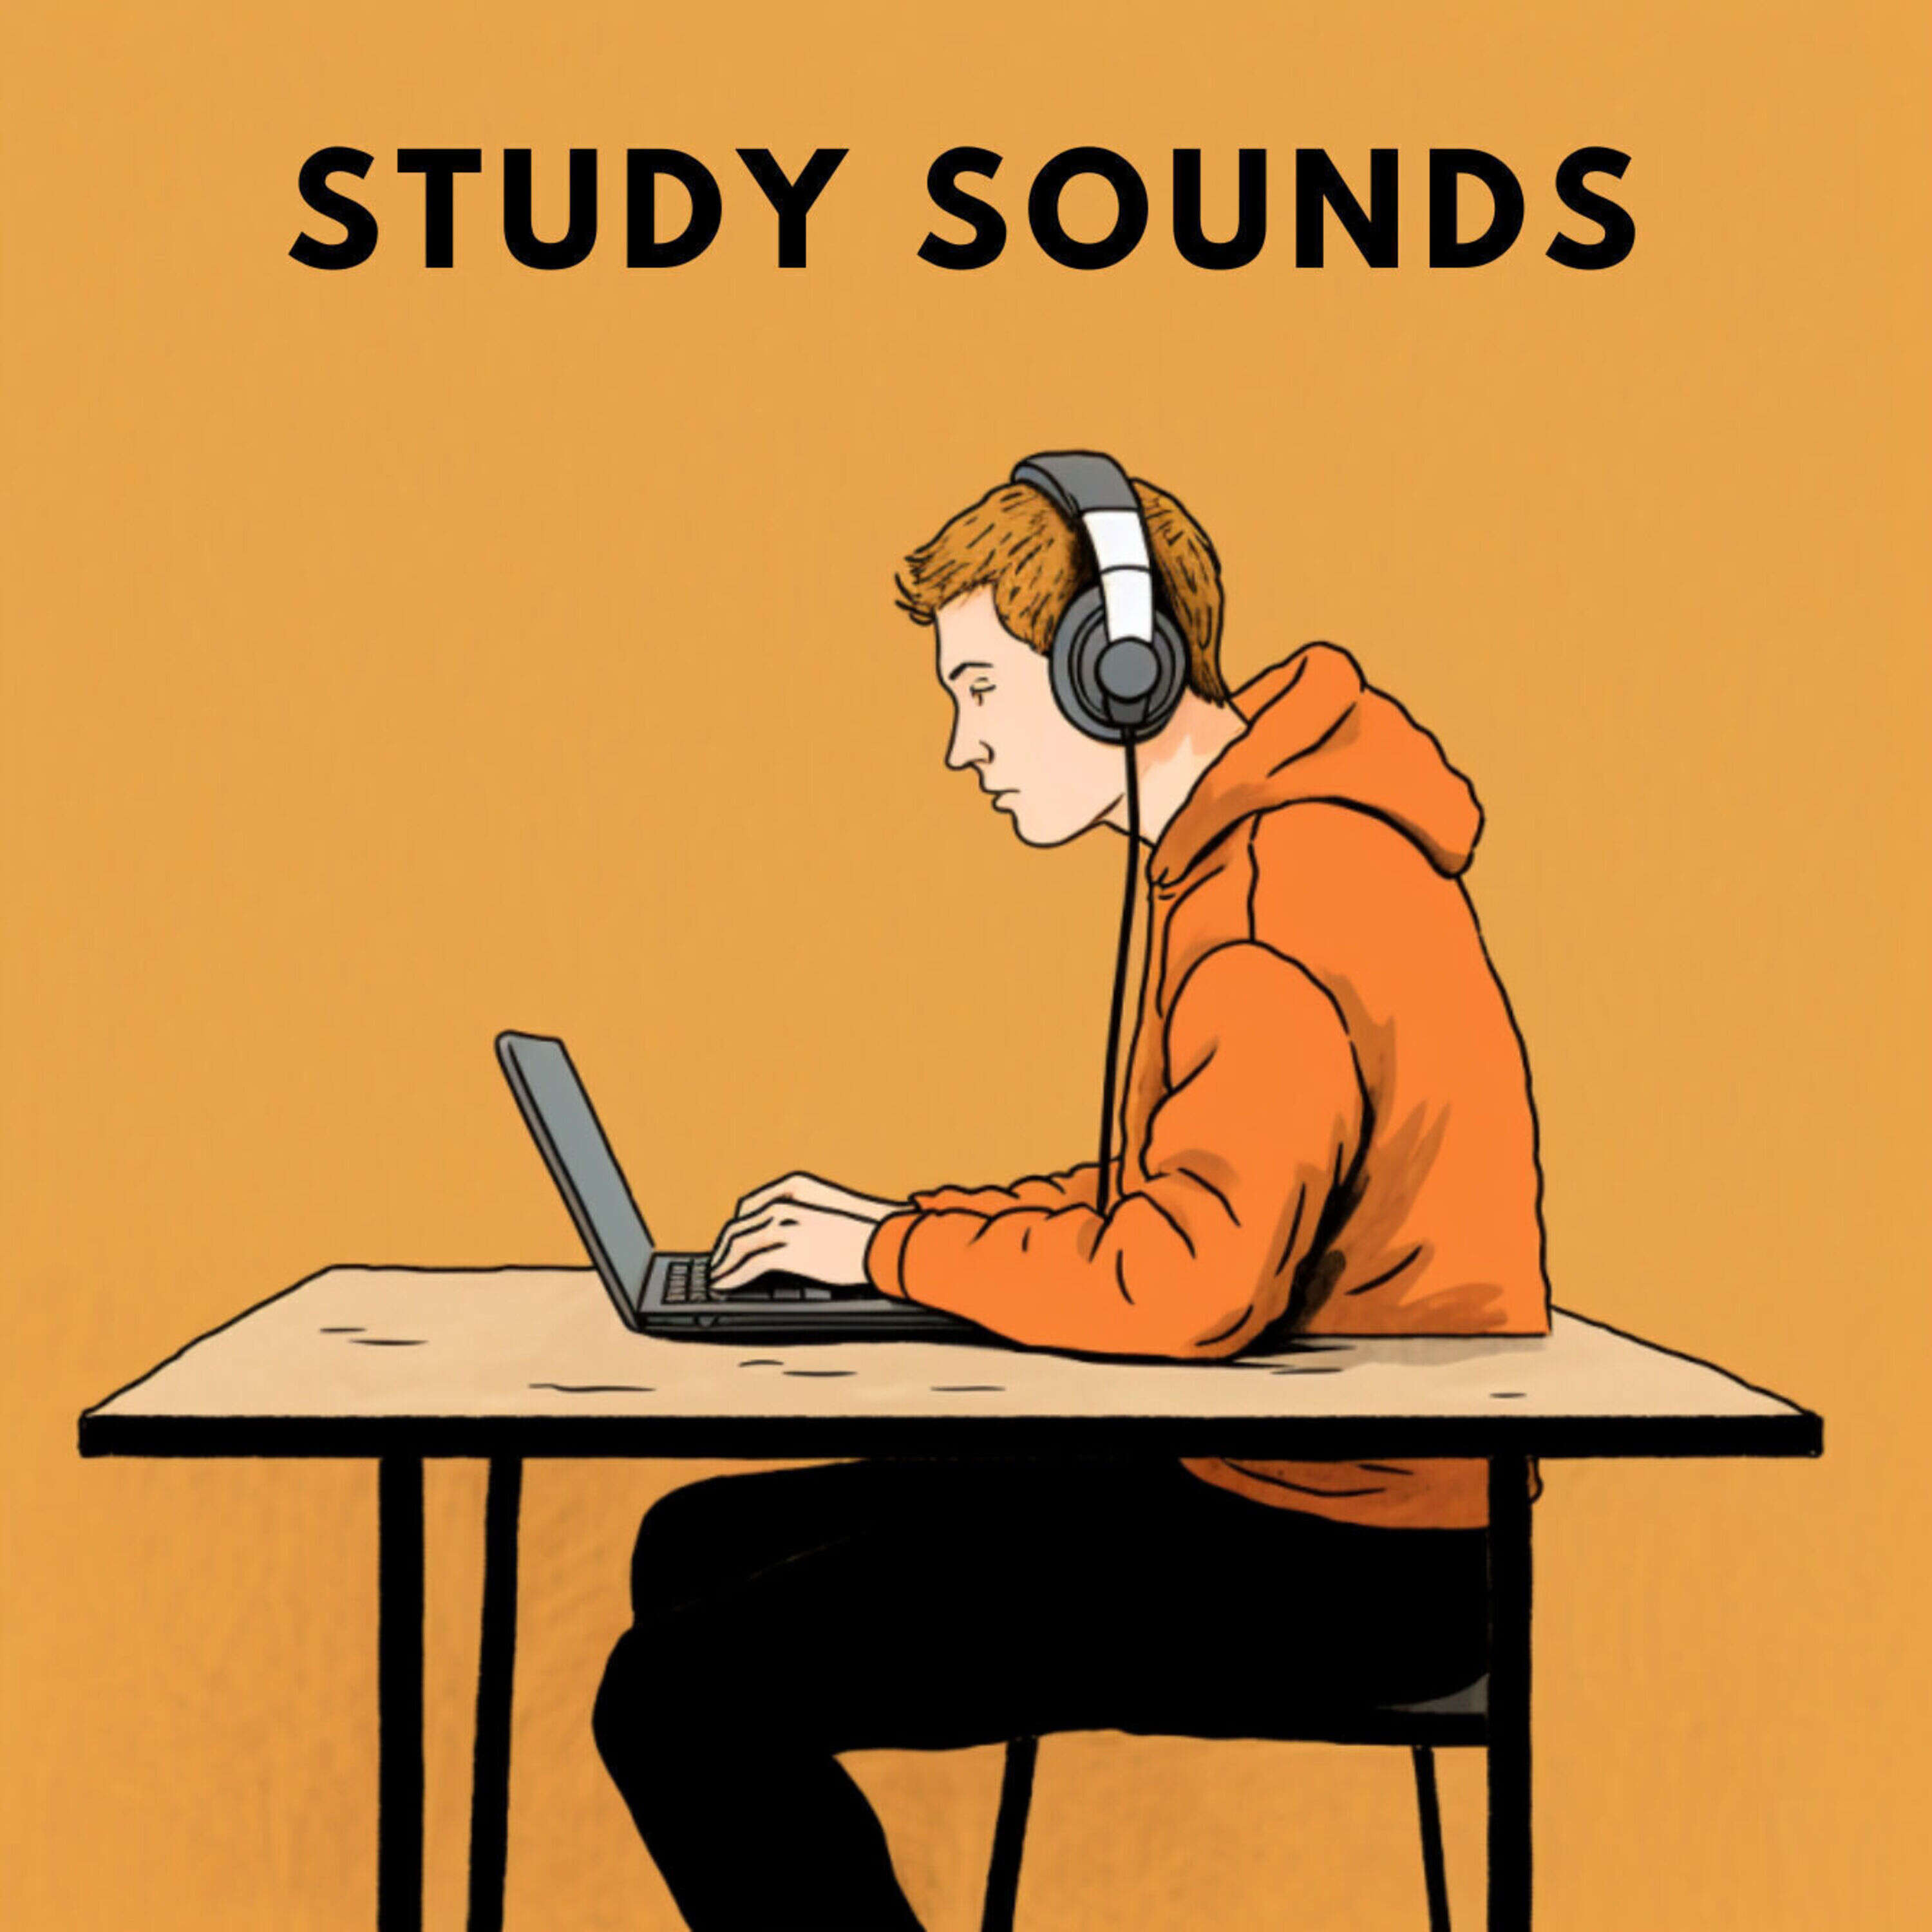 Work Sounds / Study Sounds / Concentration Sounds